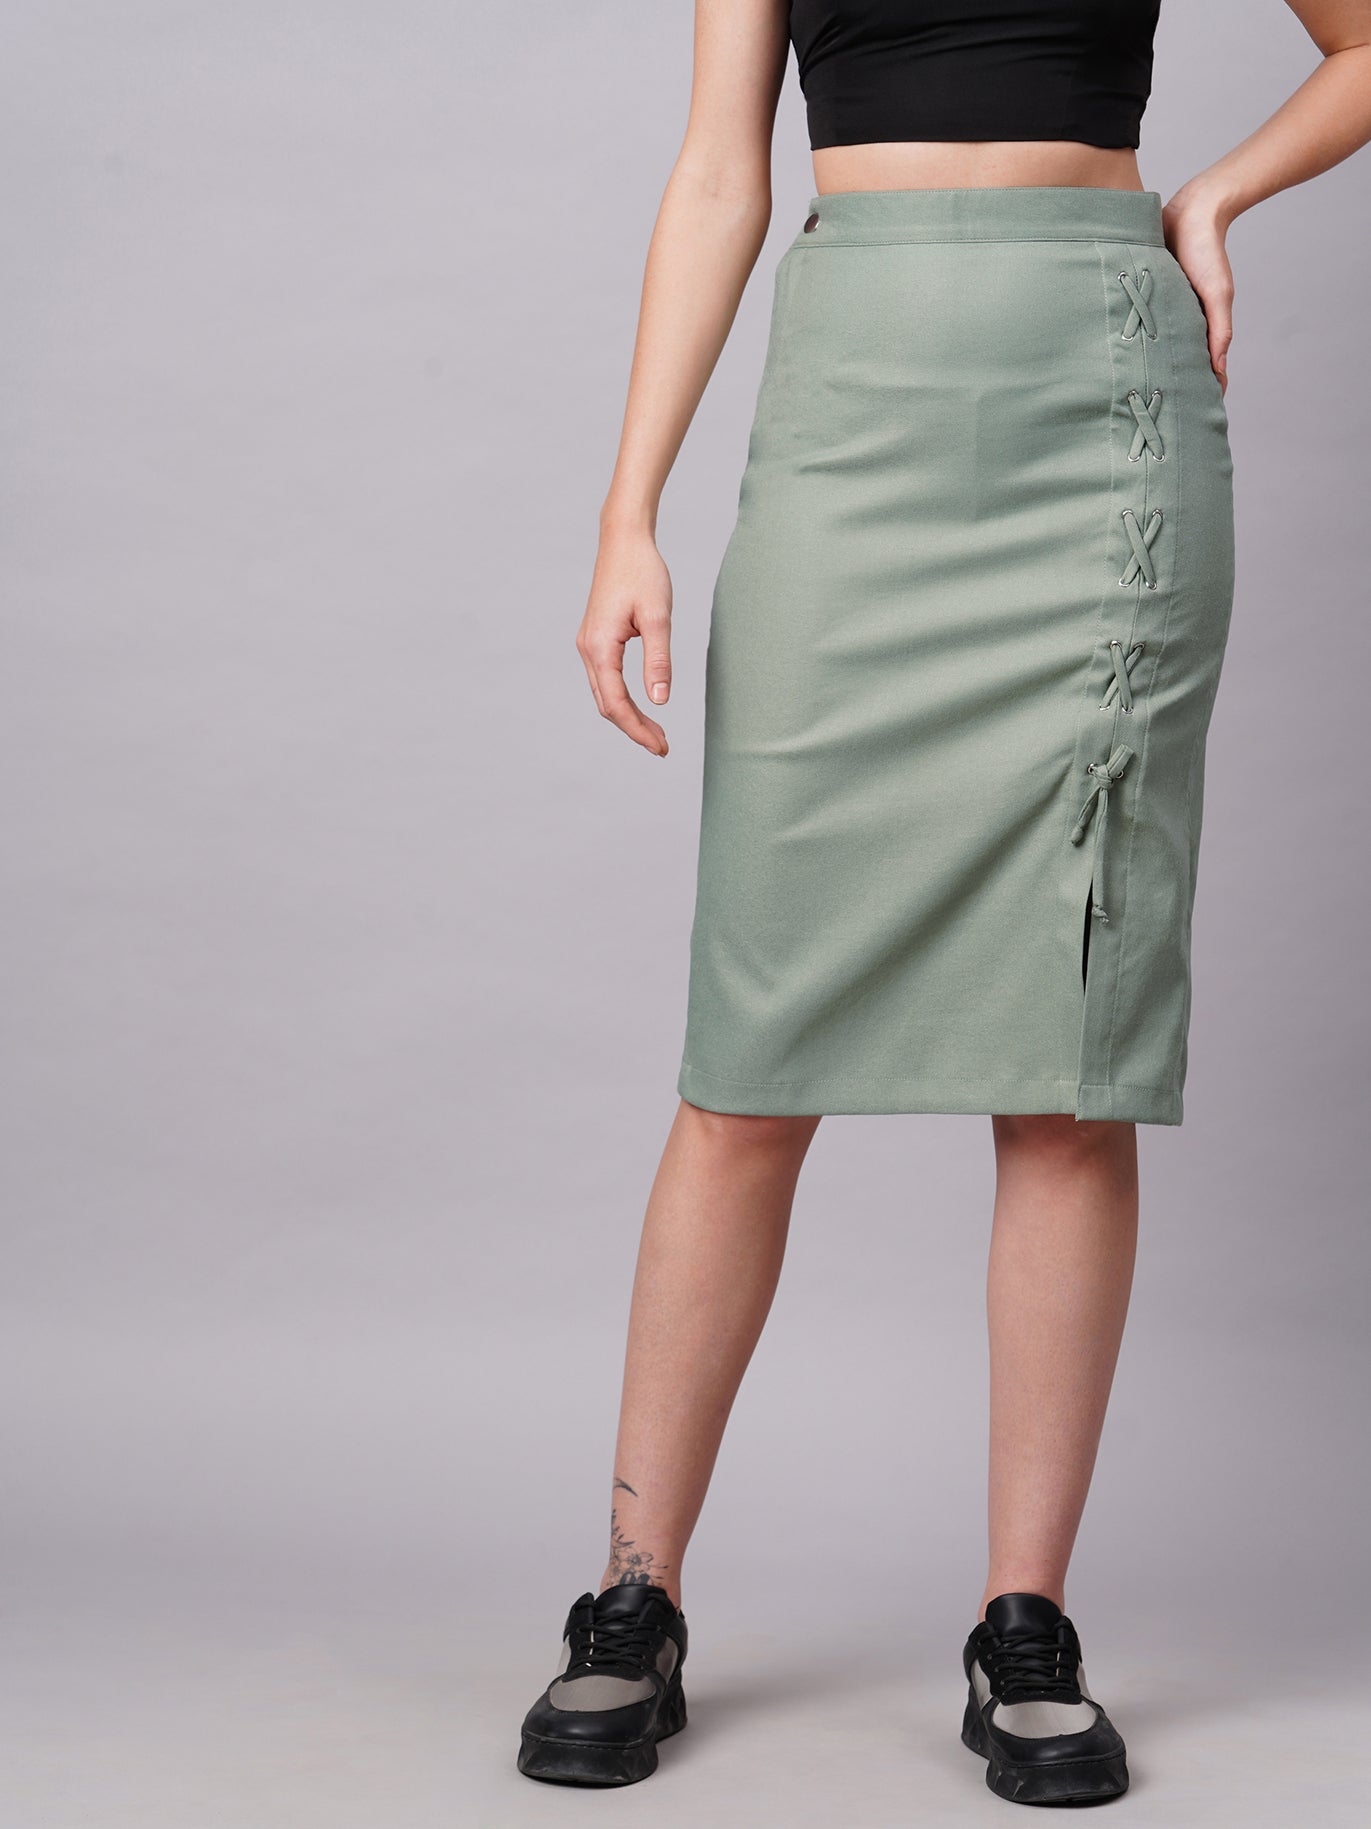 Silhouette Skirt - Styleyn